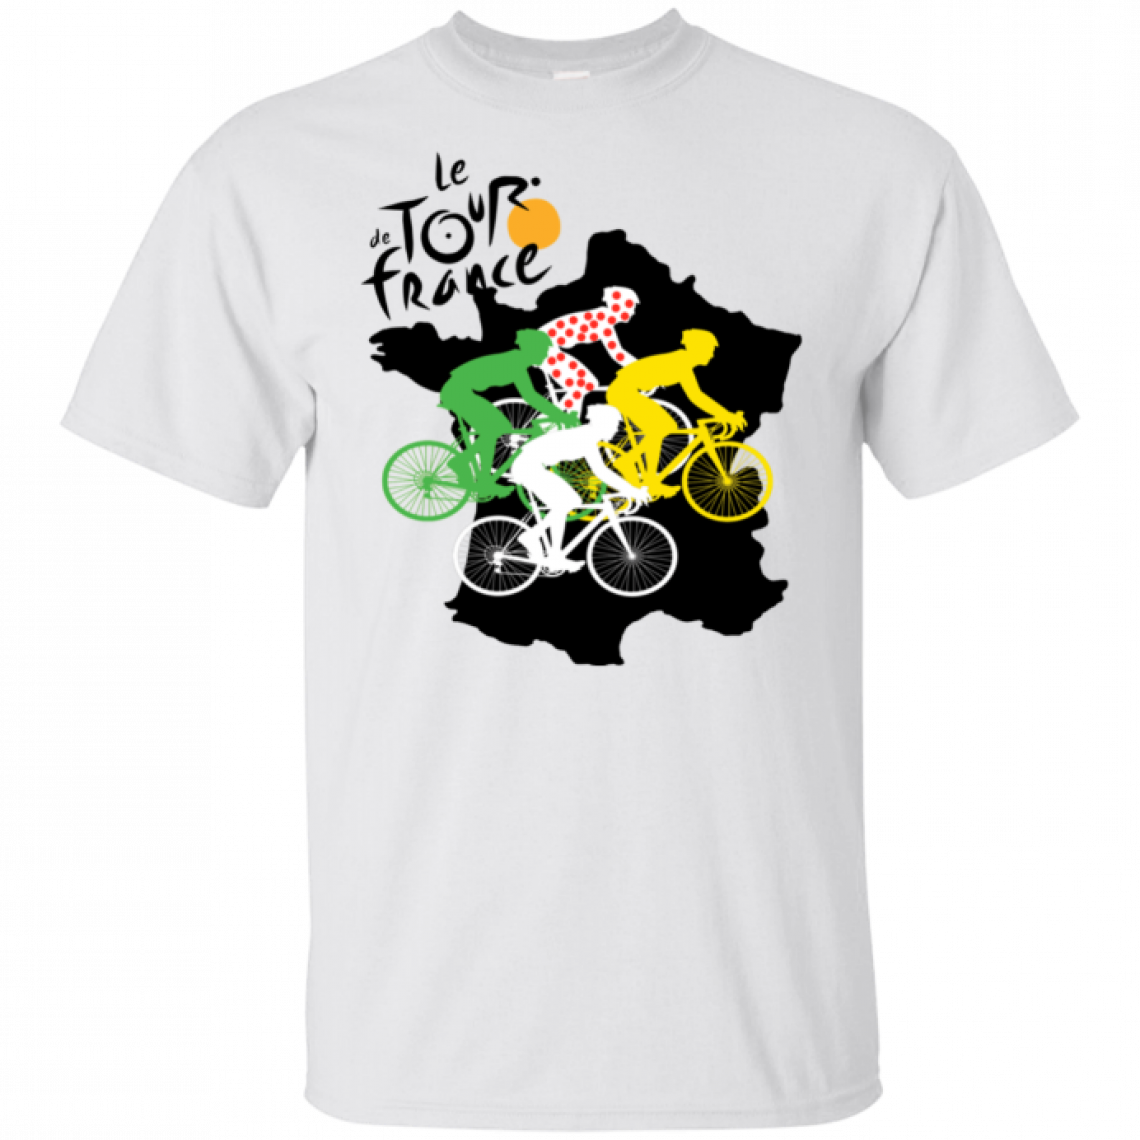 Tour de France tričko